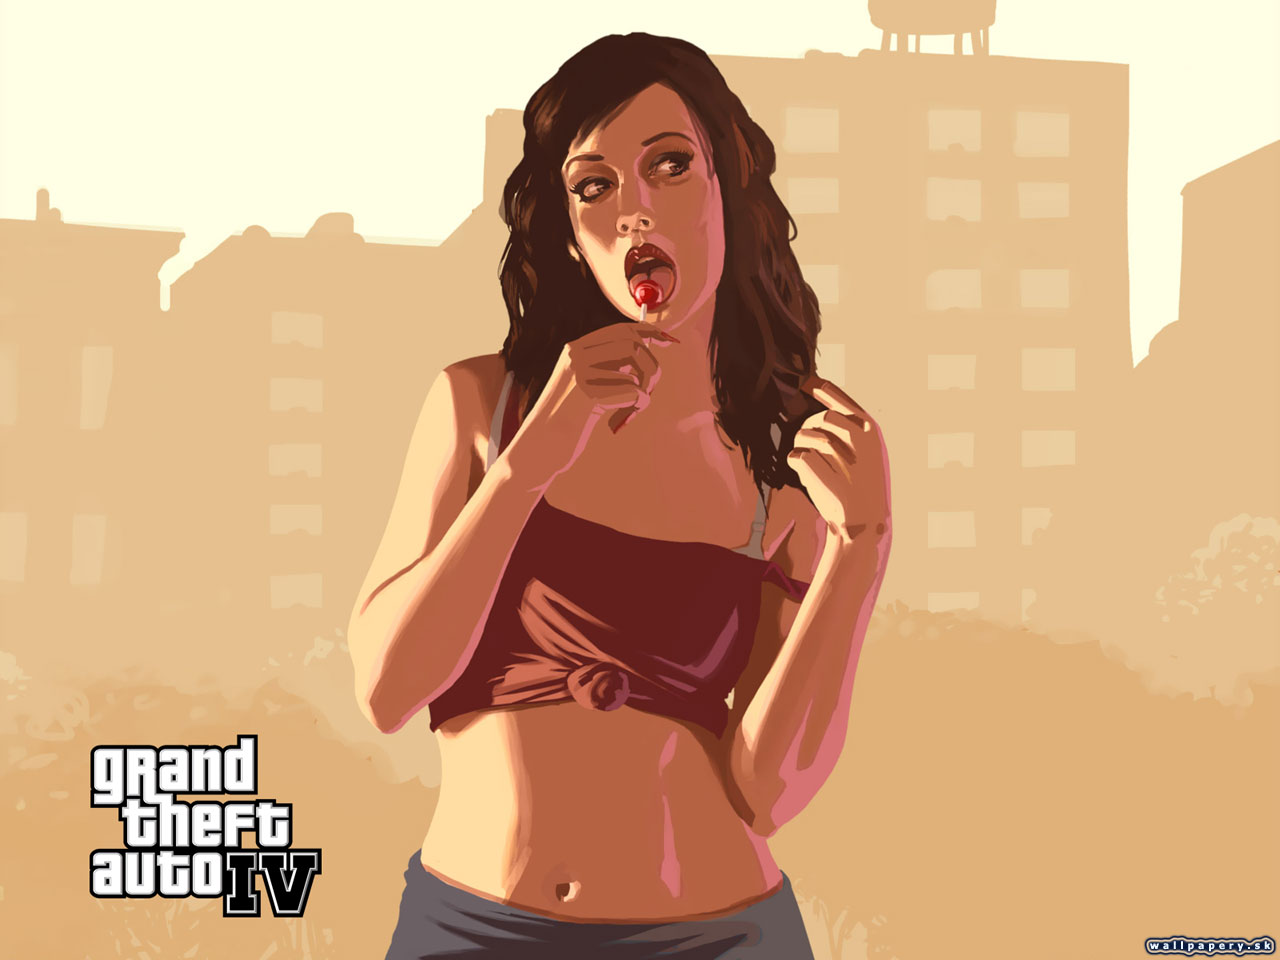 Grand Theft Auto IV - wallpaper 23